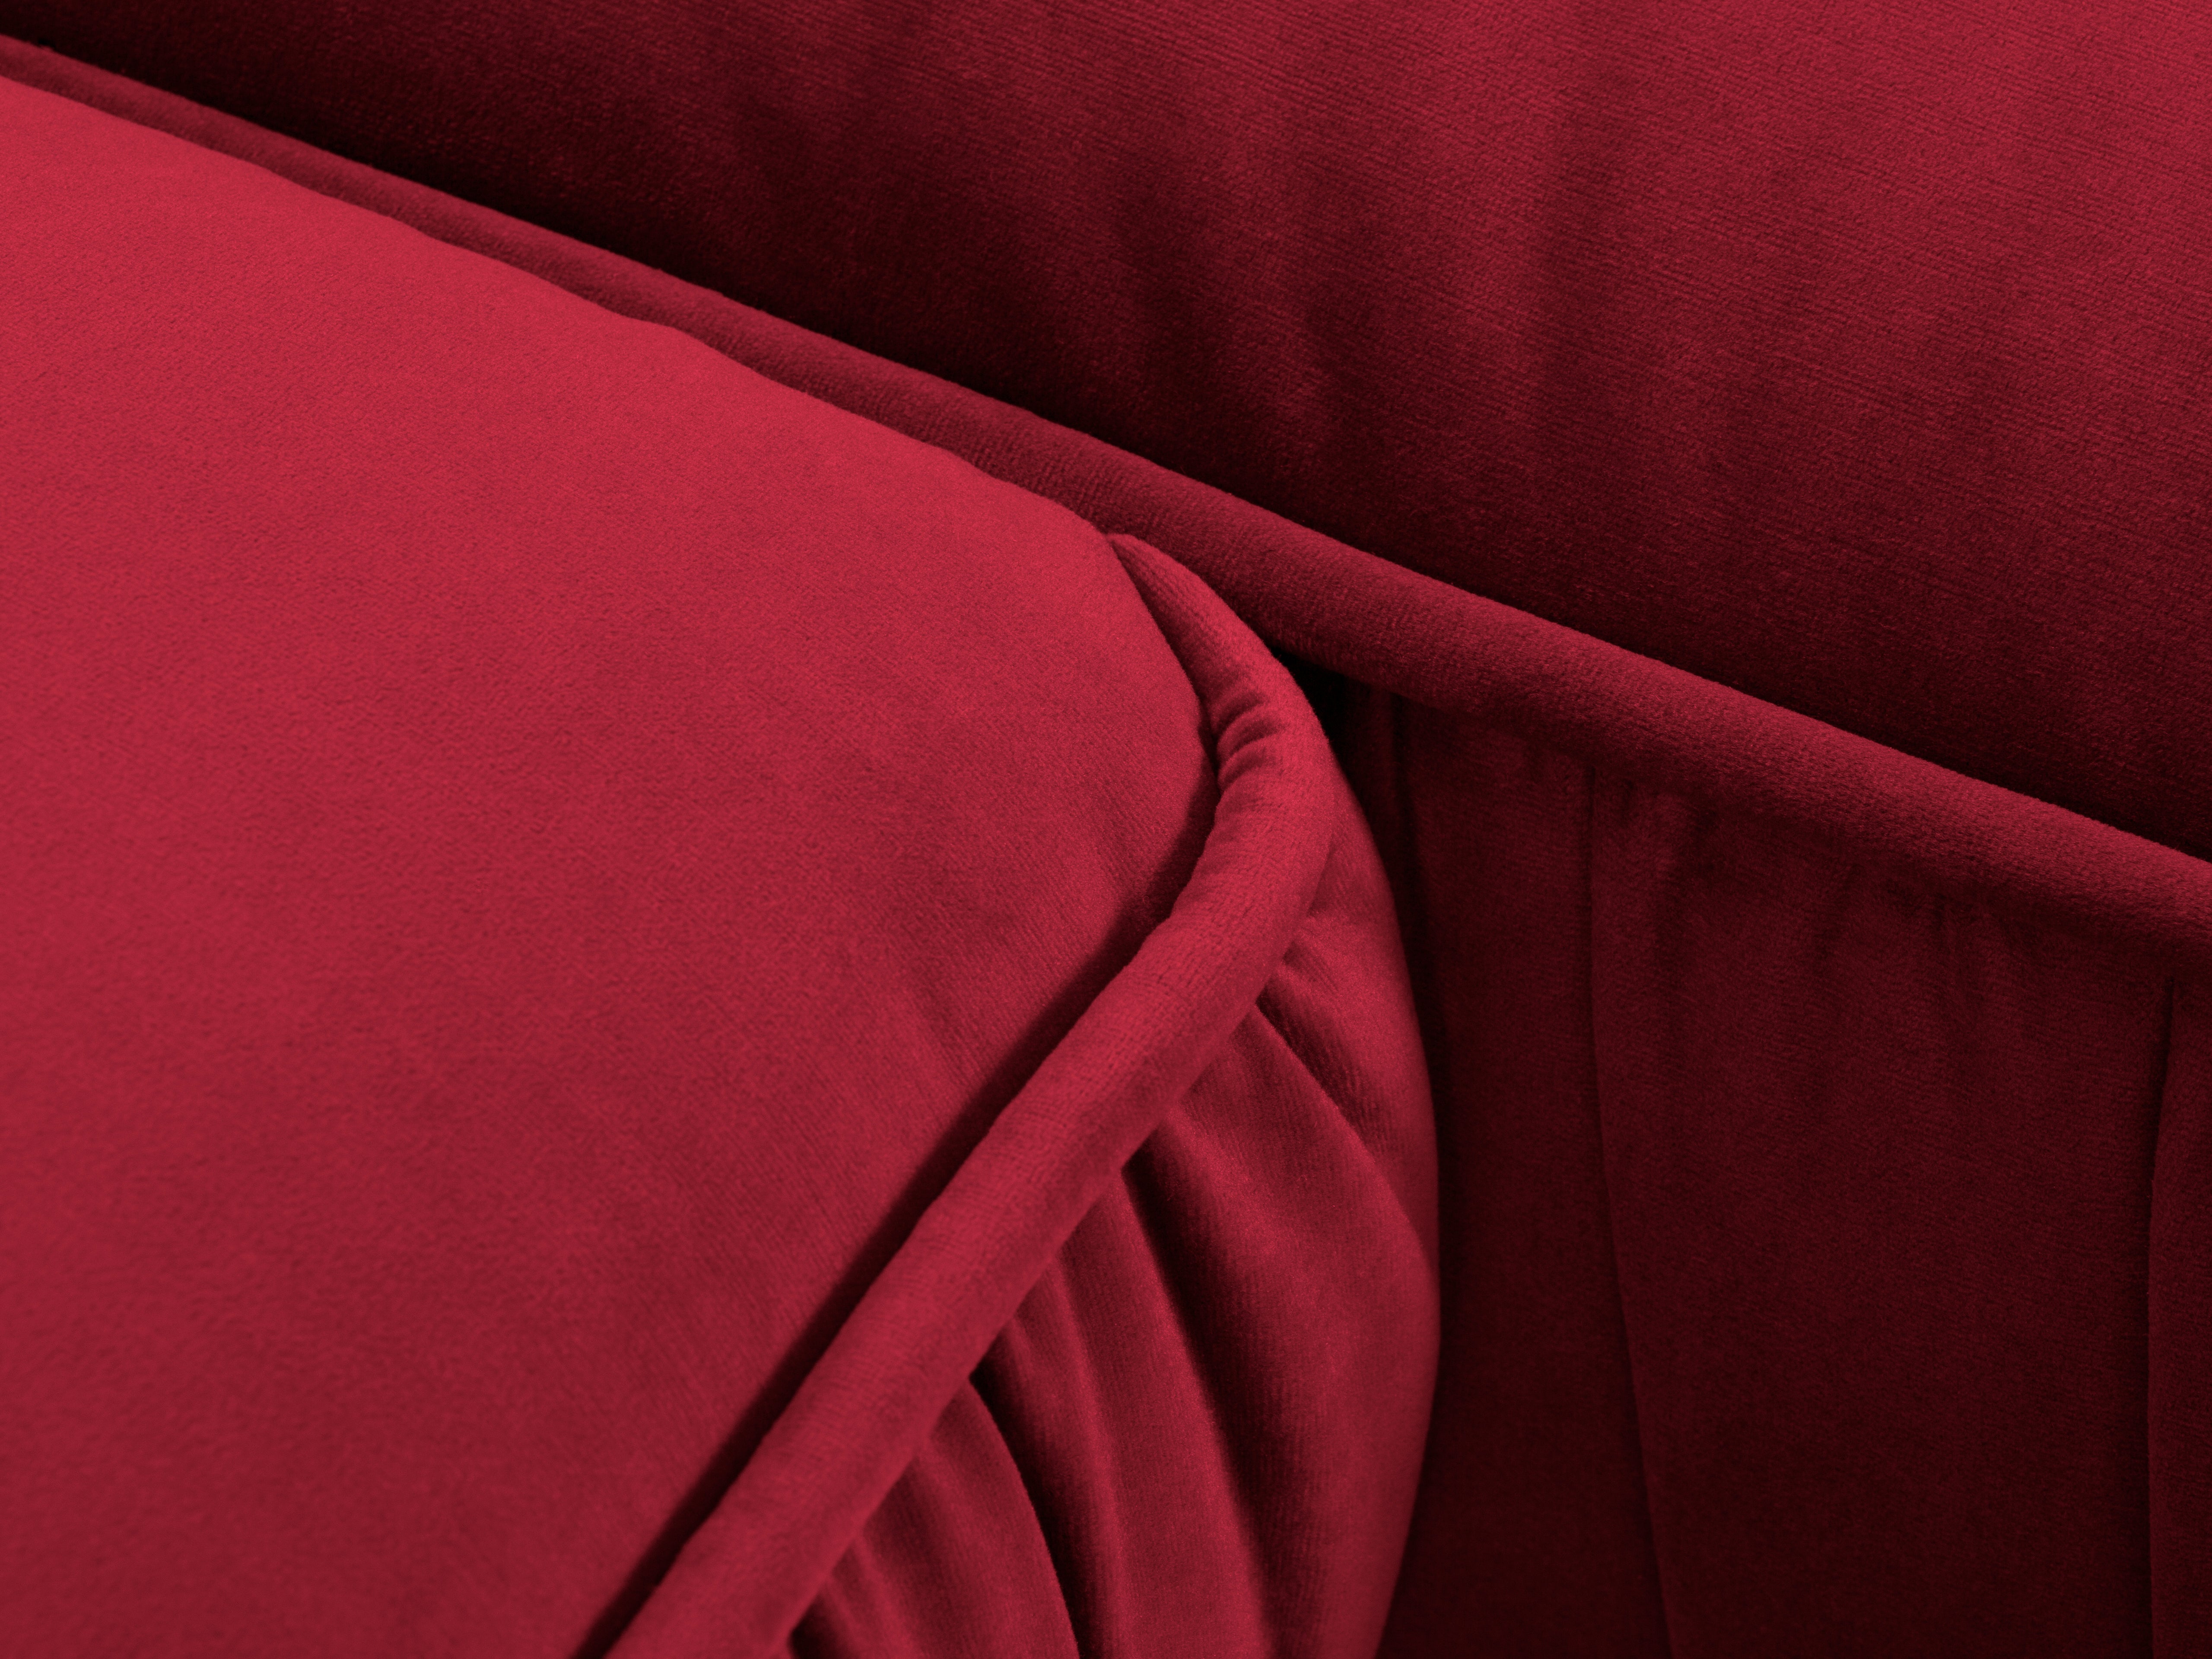 Velvet corner sofa JARDANITE maroon right